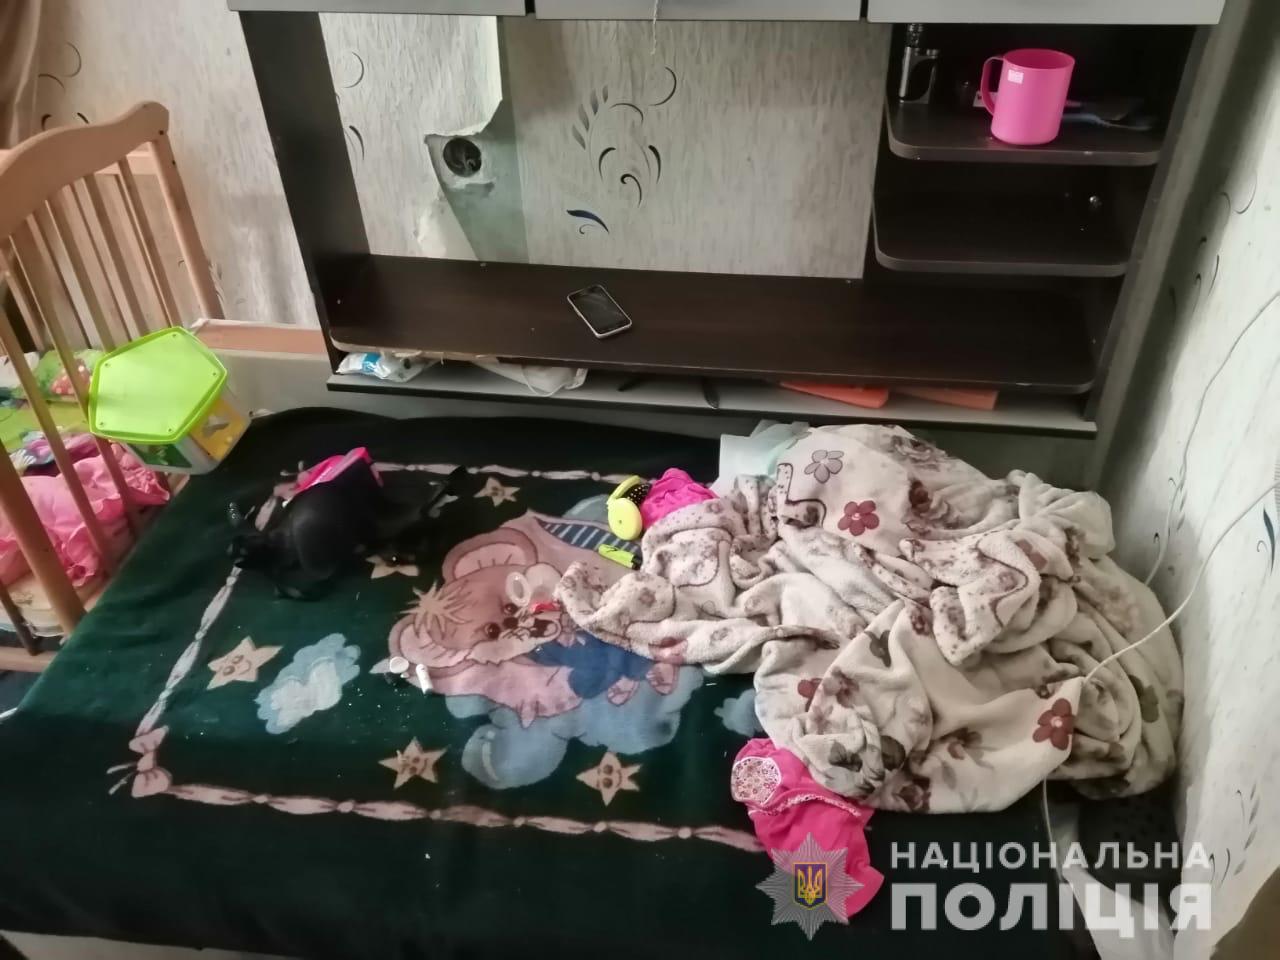 Грязь и крики: в Харькове родители держали ребенка в нечеловеческих условиях